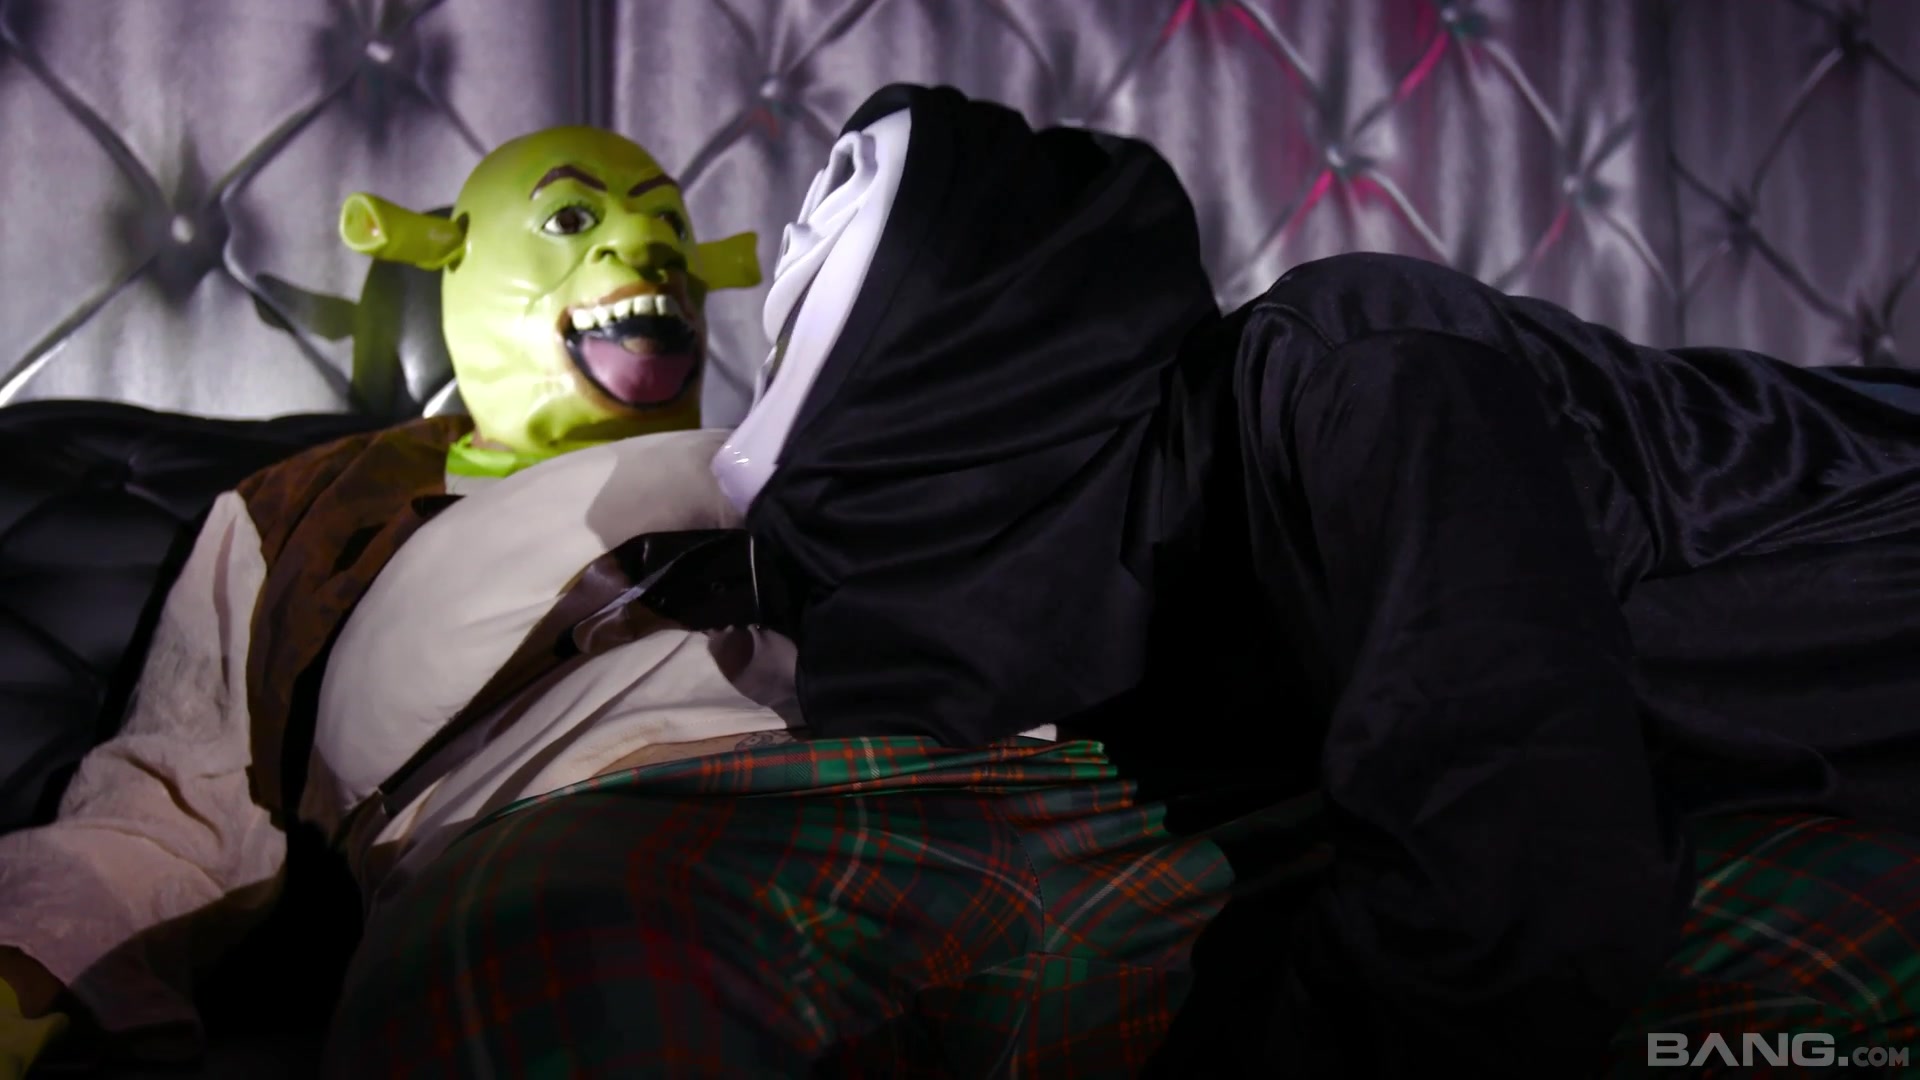 Shrek Anal Porn - Kinky fetish in dirty Shrek role play - XBabe video